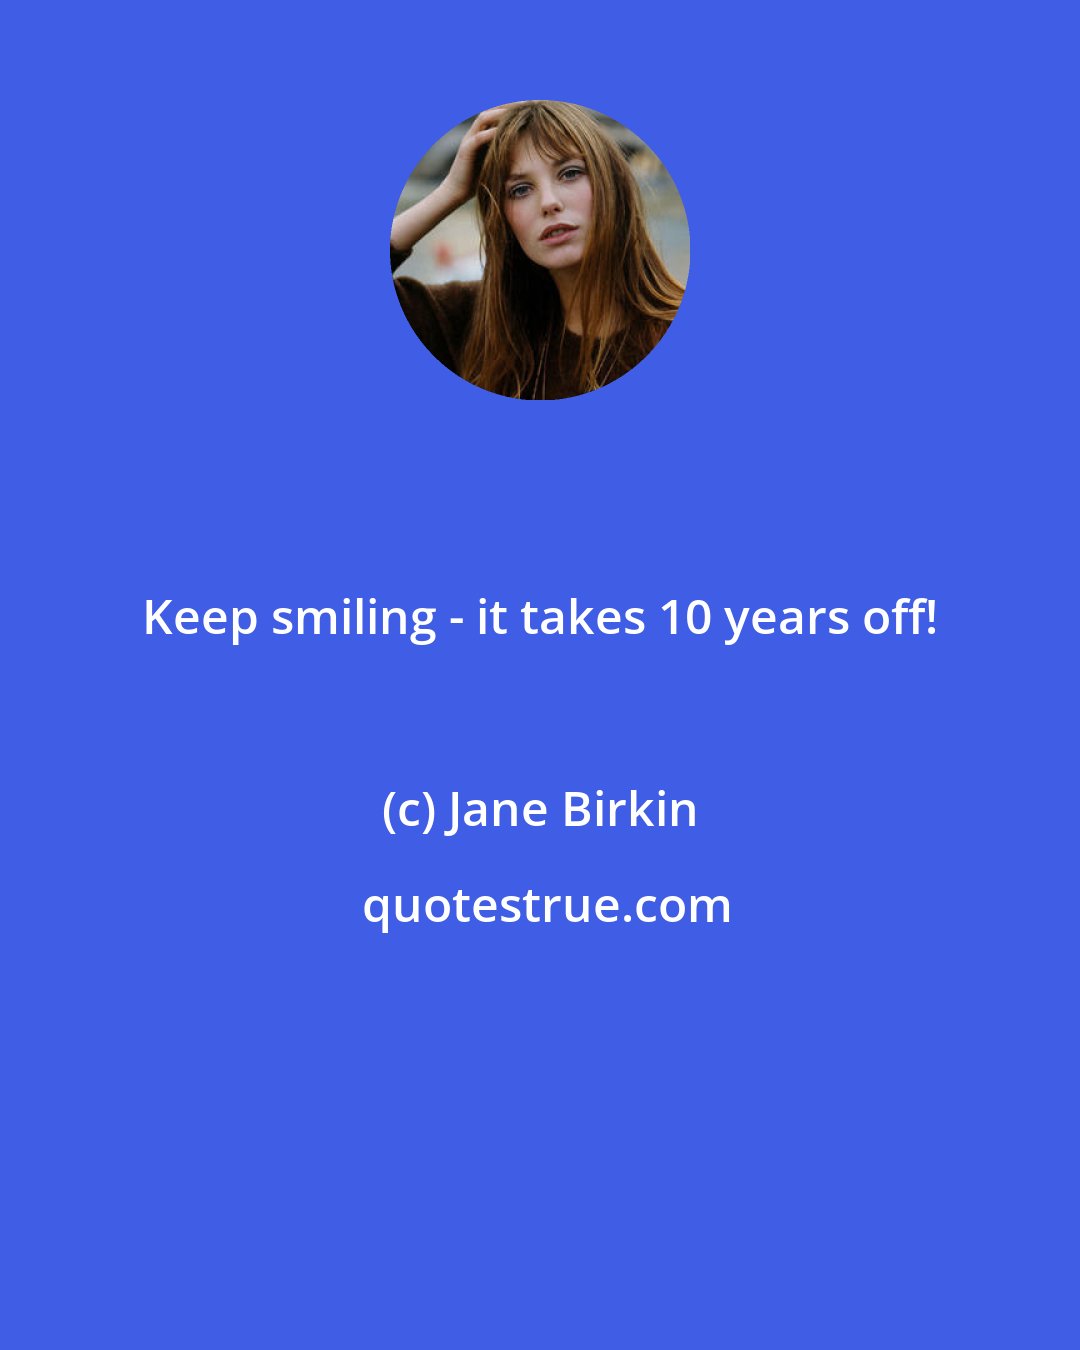 Jane Birkin: Keep smiling - it takes 10 years off!